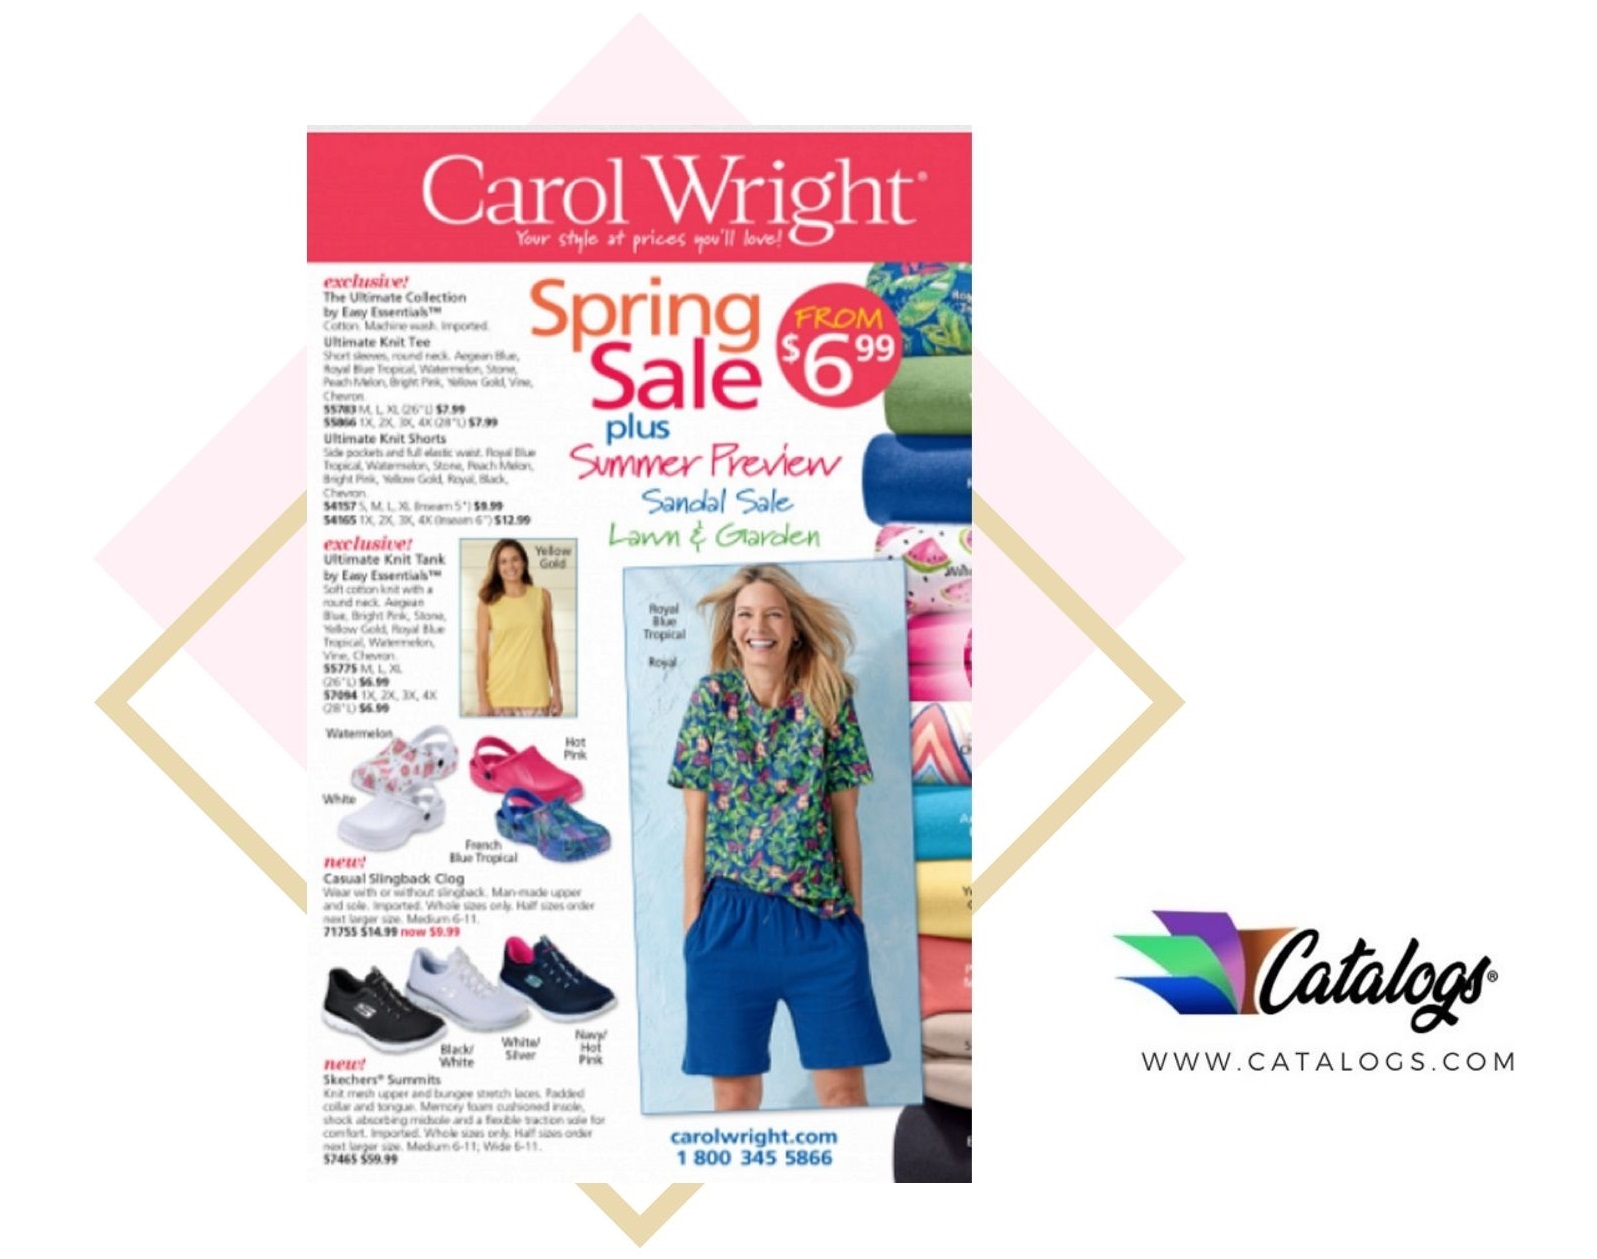 How Do I Order a Free Carol Wright Home and Clothing Catalog?